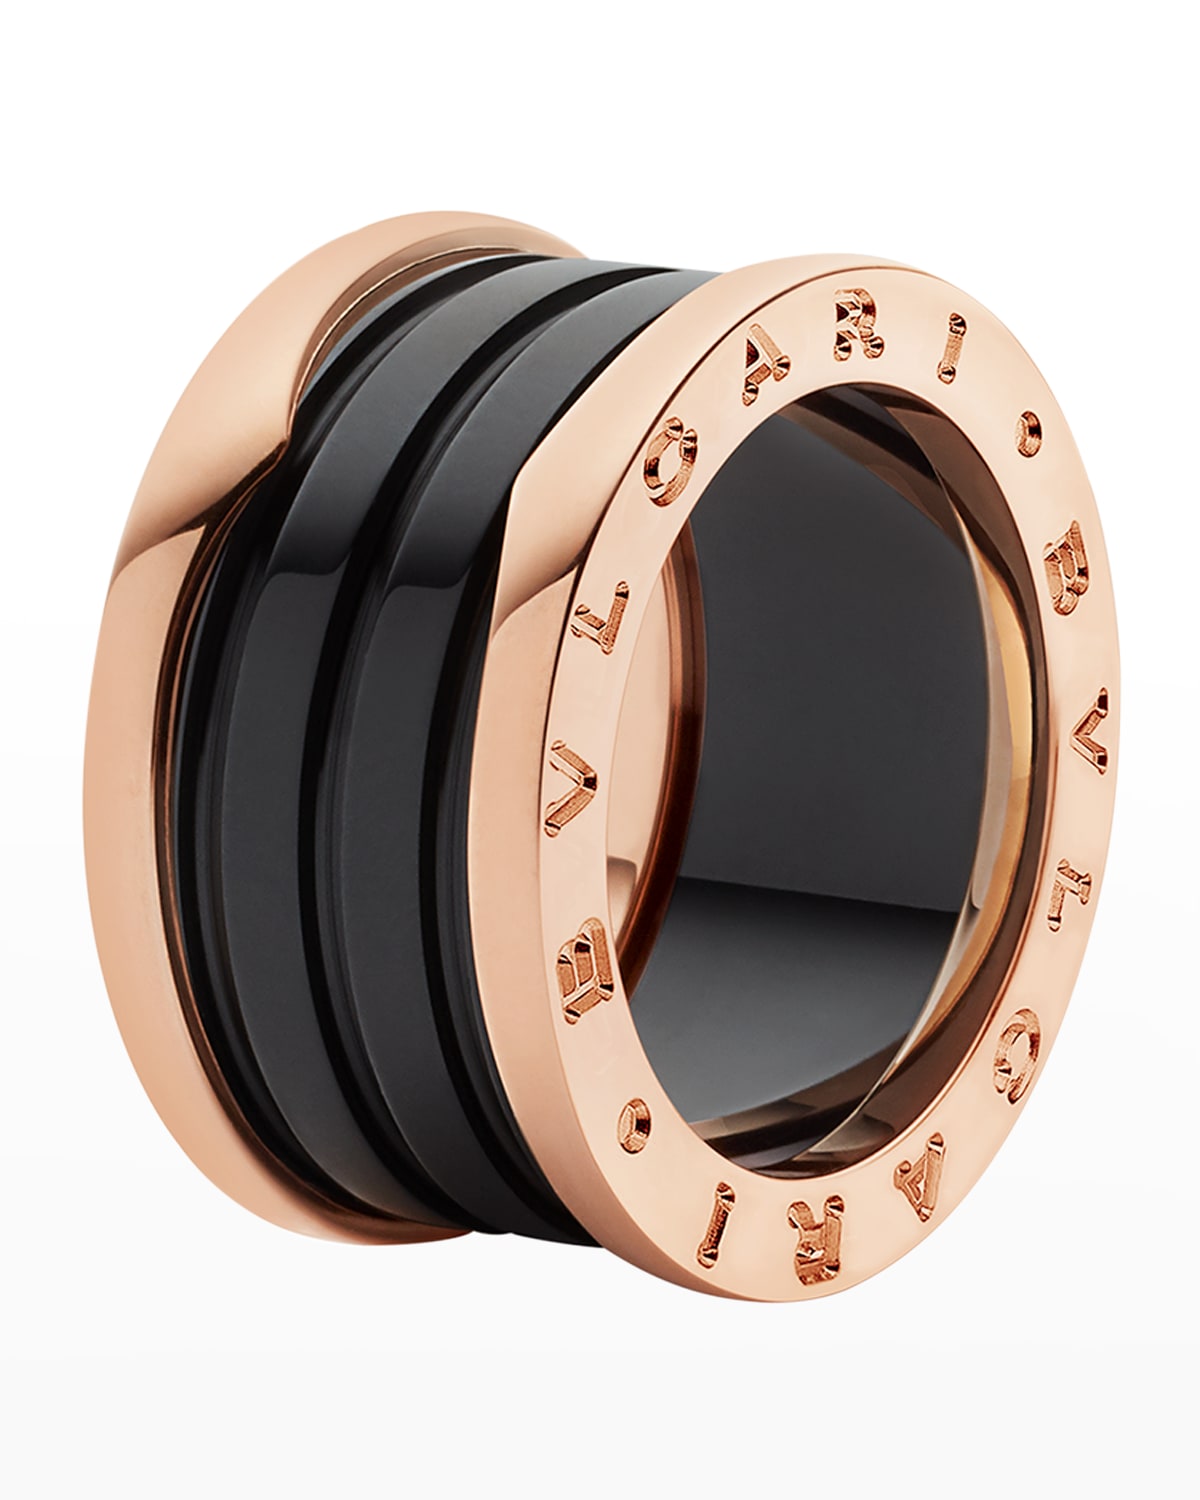 B.Zero1 Pink Gold Black Ceramic Ring, Size 52